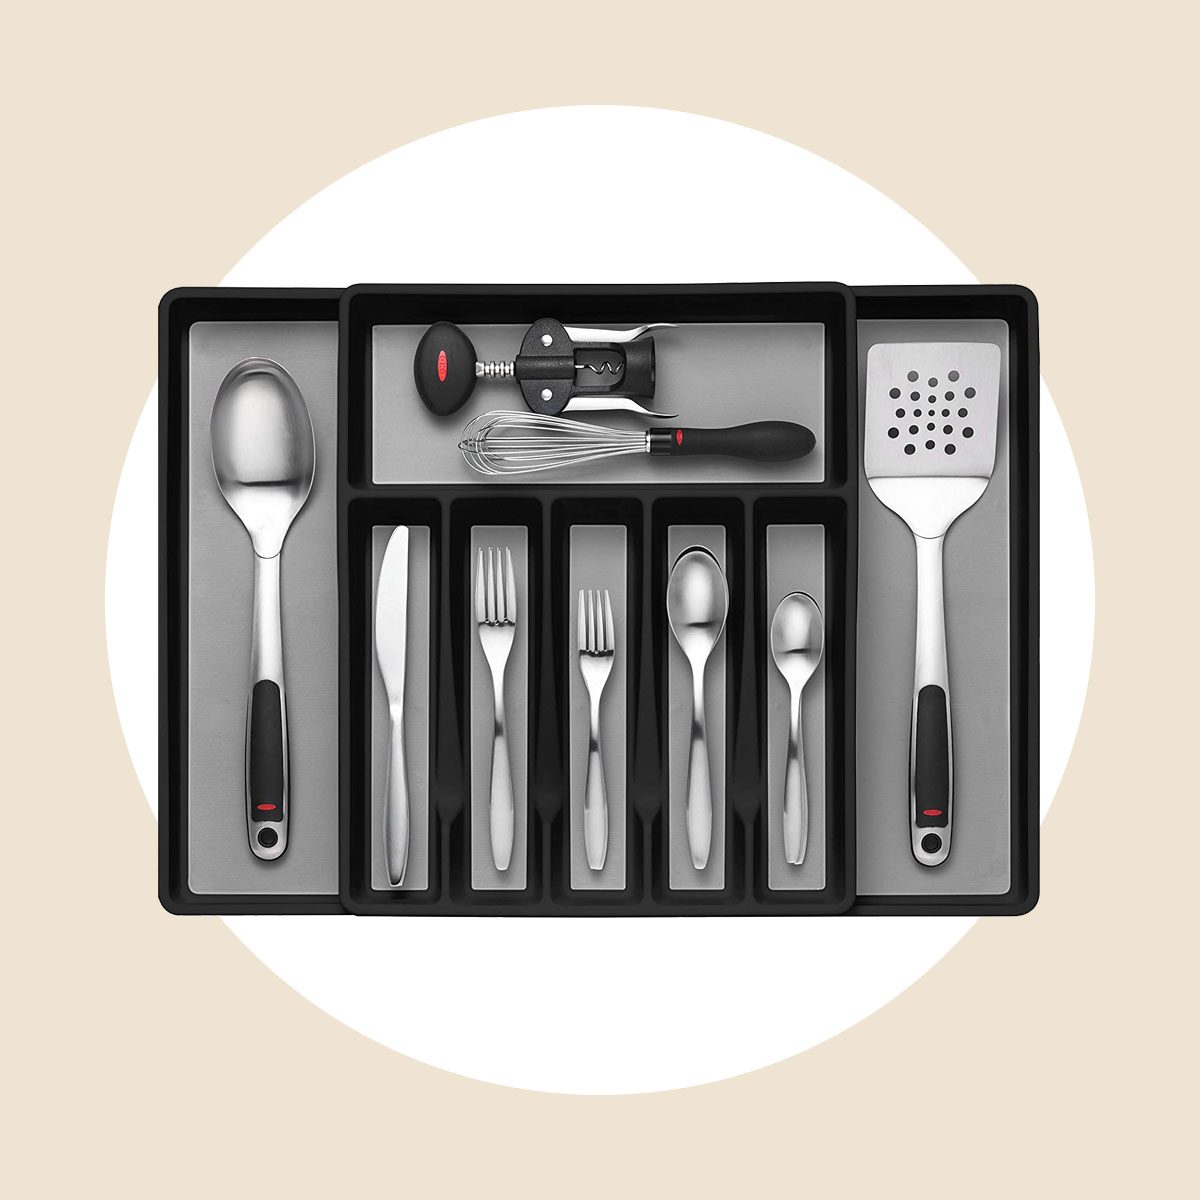 Seseno Expandable Cutlery Drawer Organizer Ecomm Via Amazon